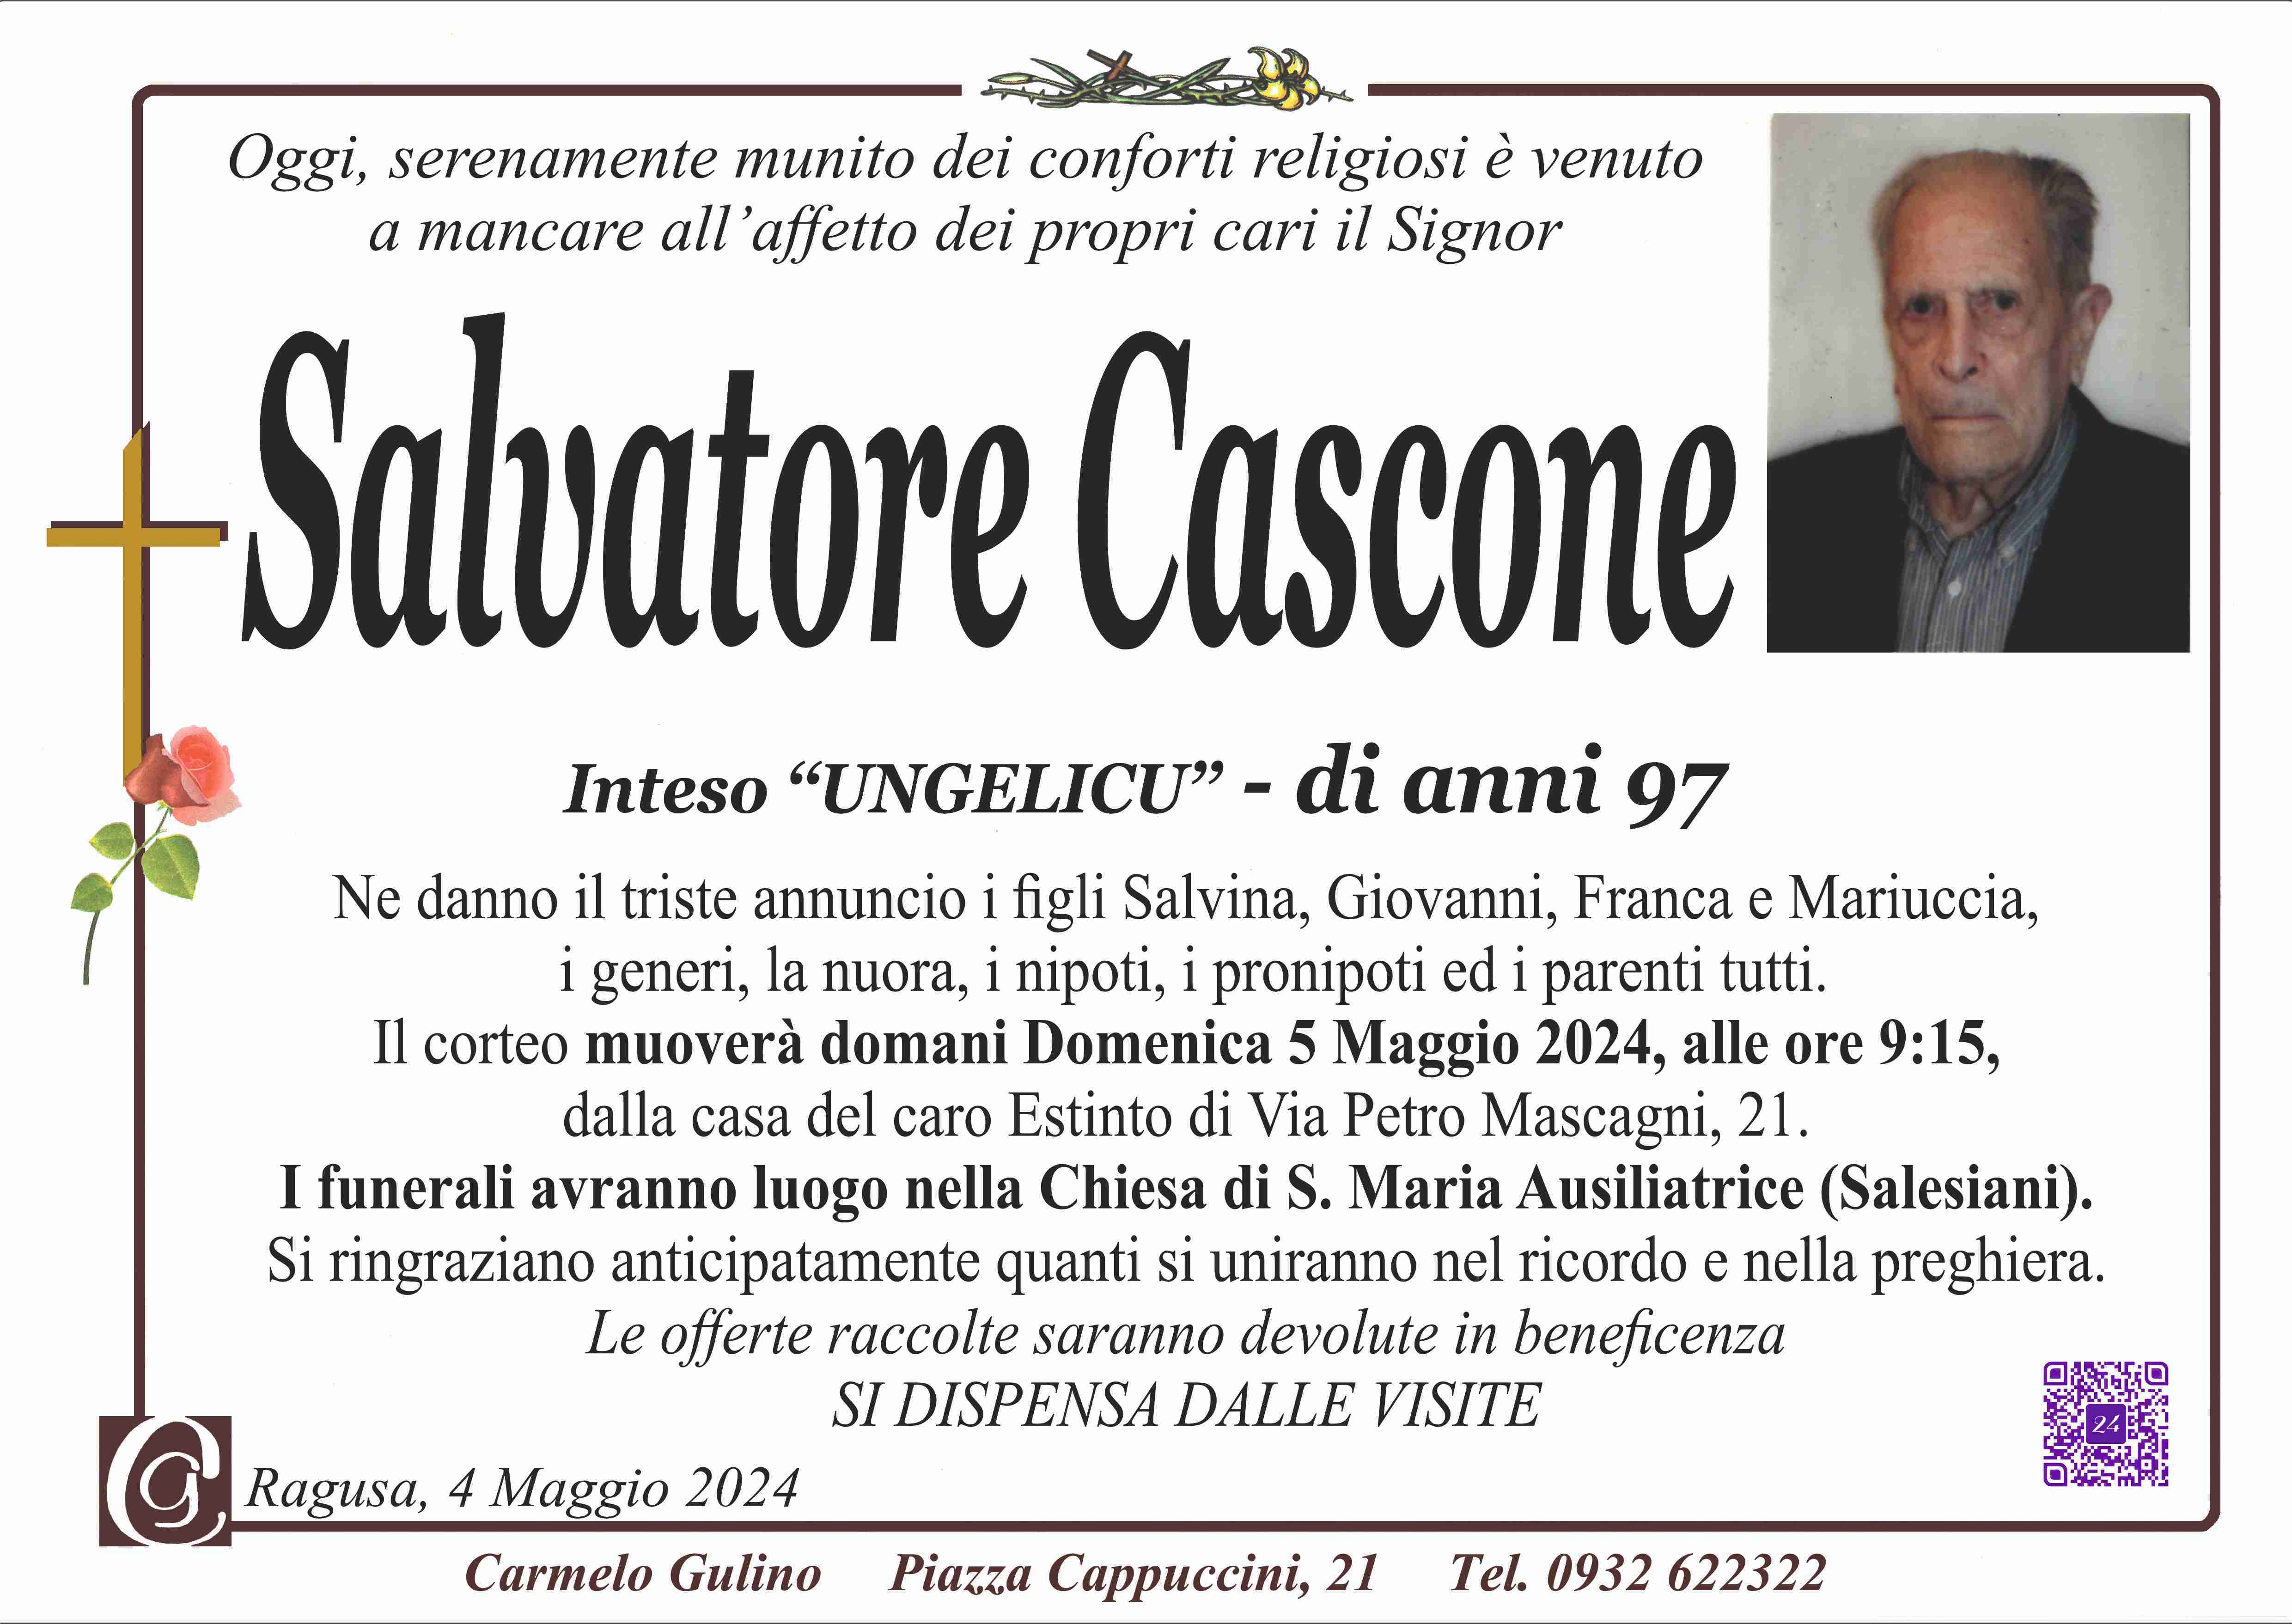 Salvatore Cascone